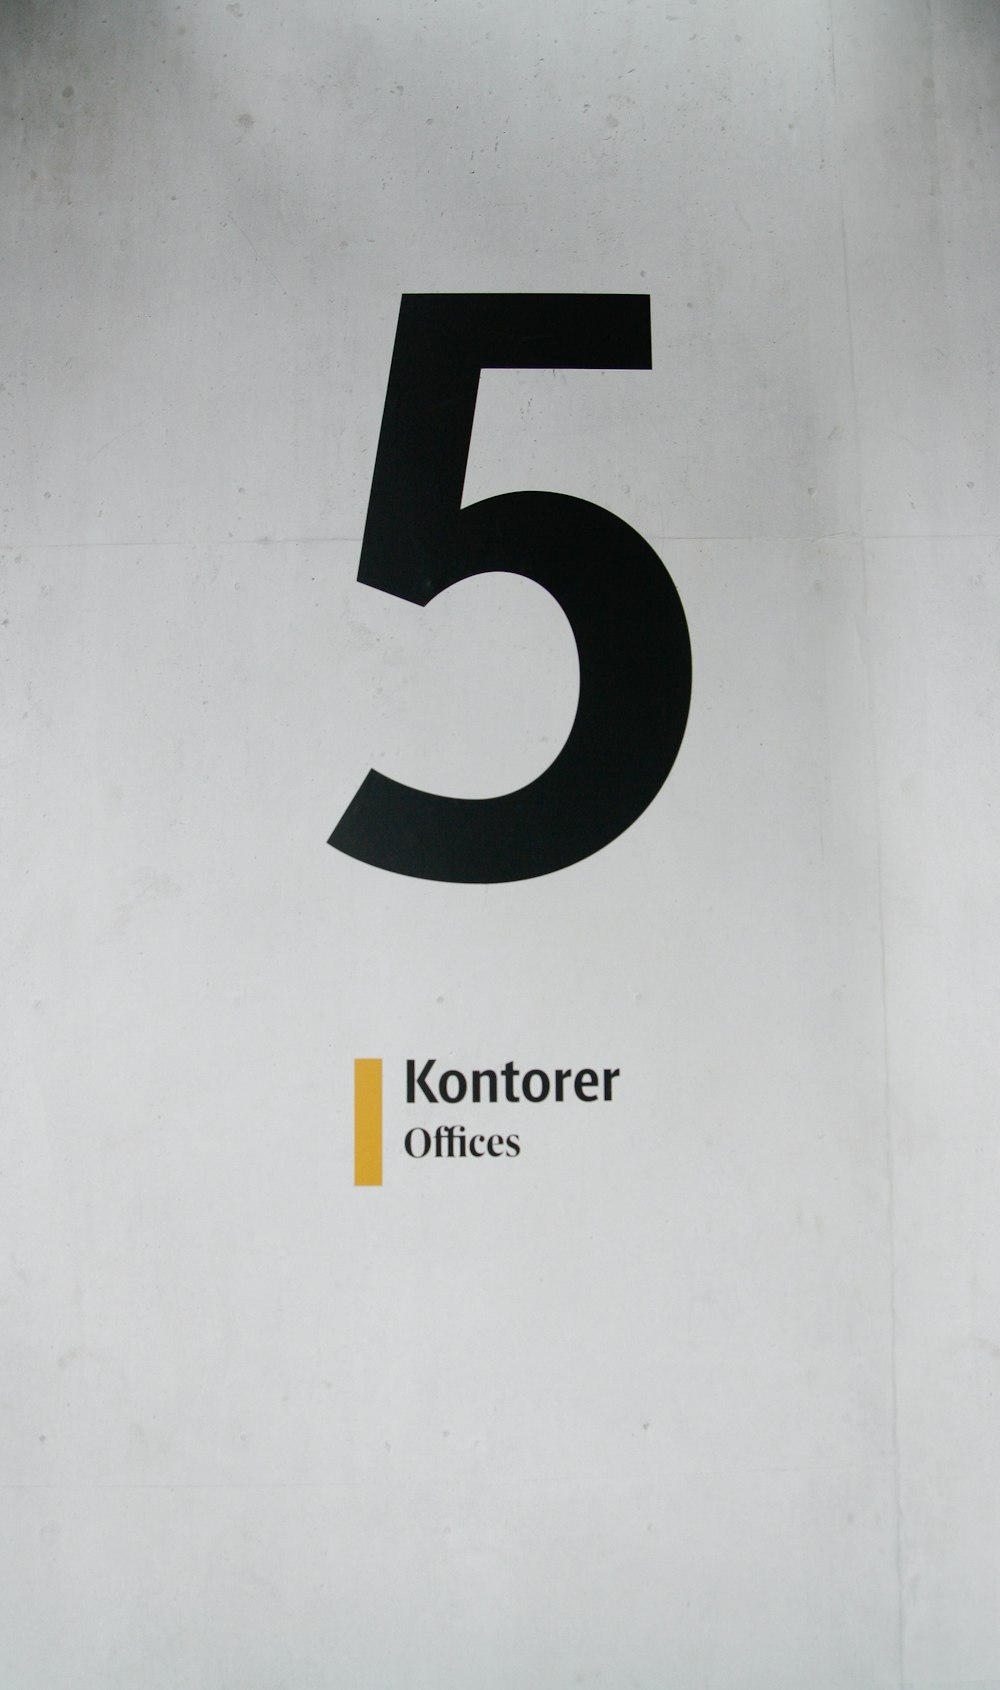 Una foto di un cartello che dice 5 uffici Kontorer